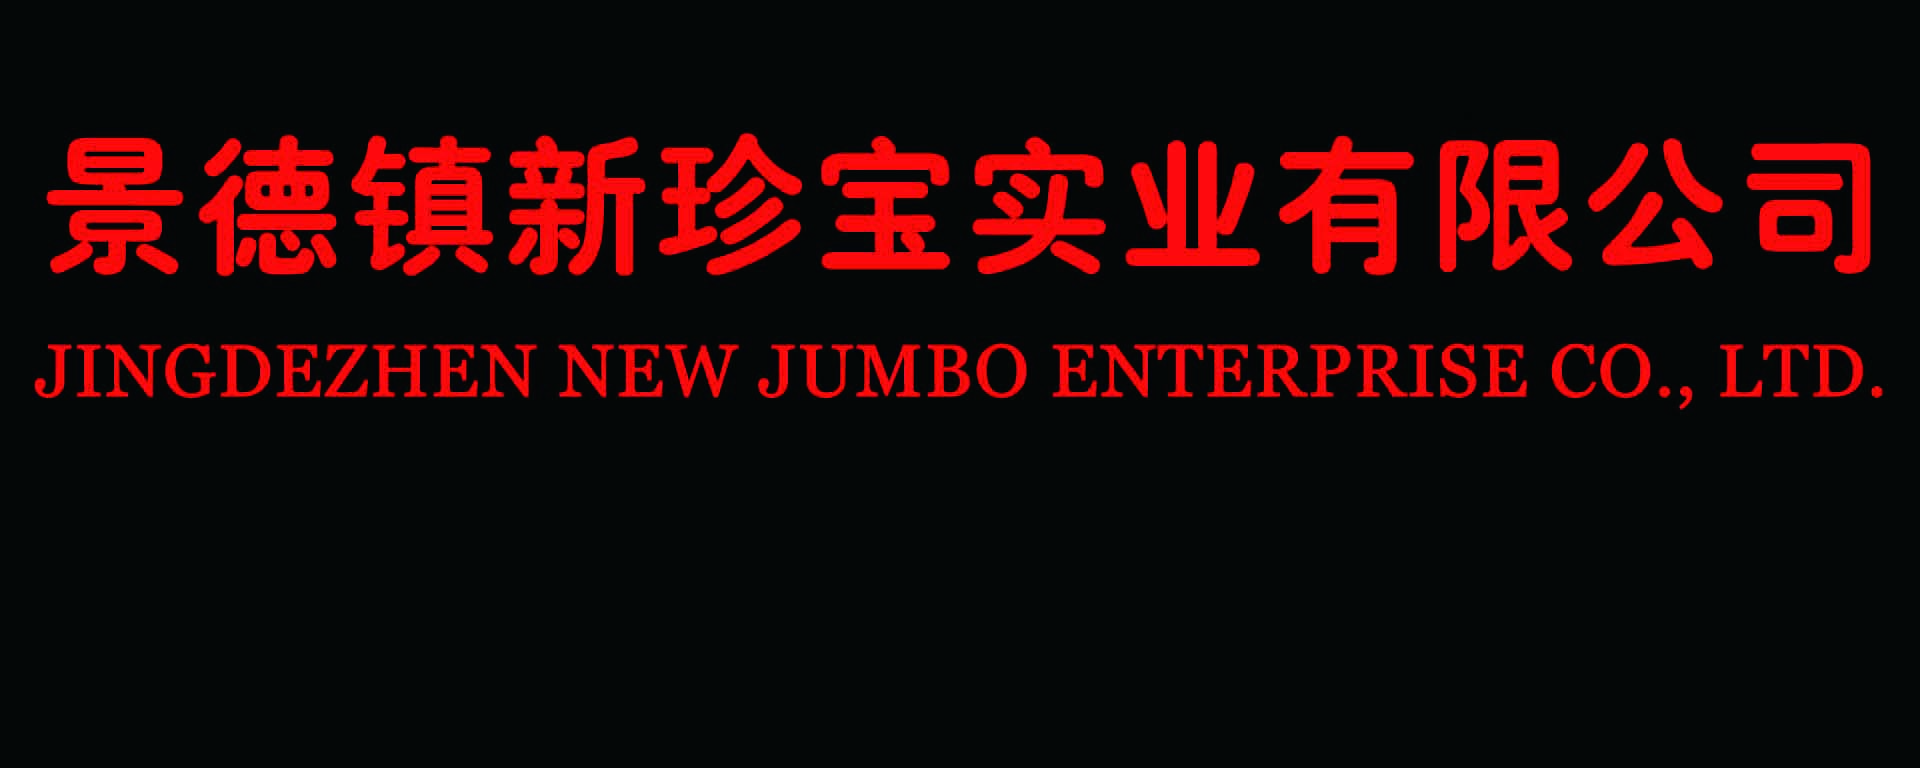 JINGDEZHEN NEW JUMBO ENTERPRISE CO., LTD.